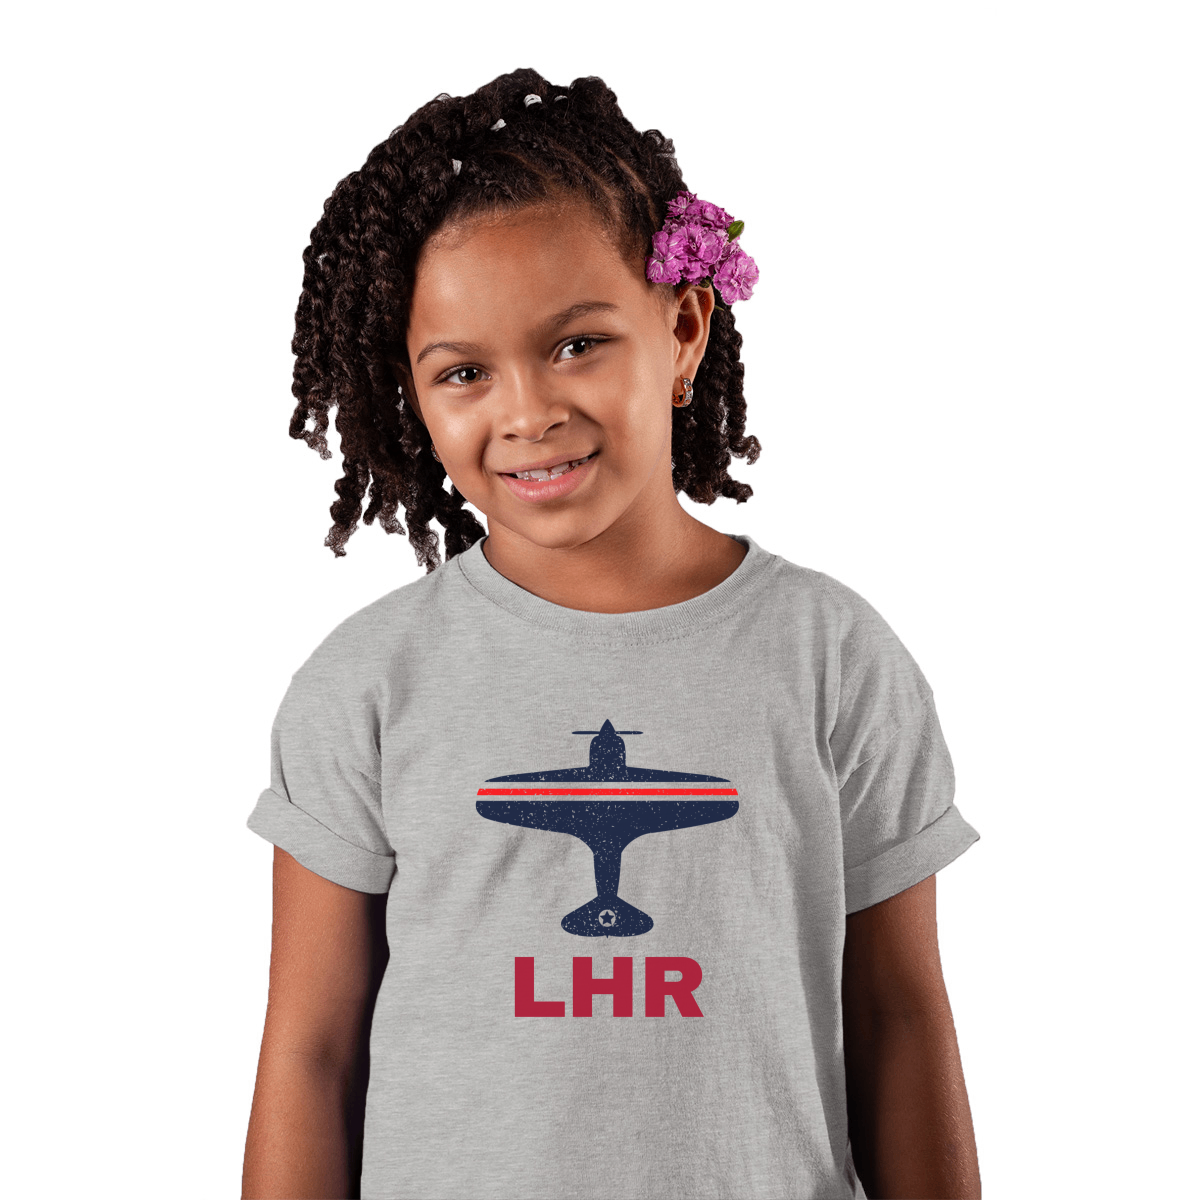 Fly London LHR Airport Kids T-shirt | Gray